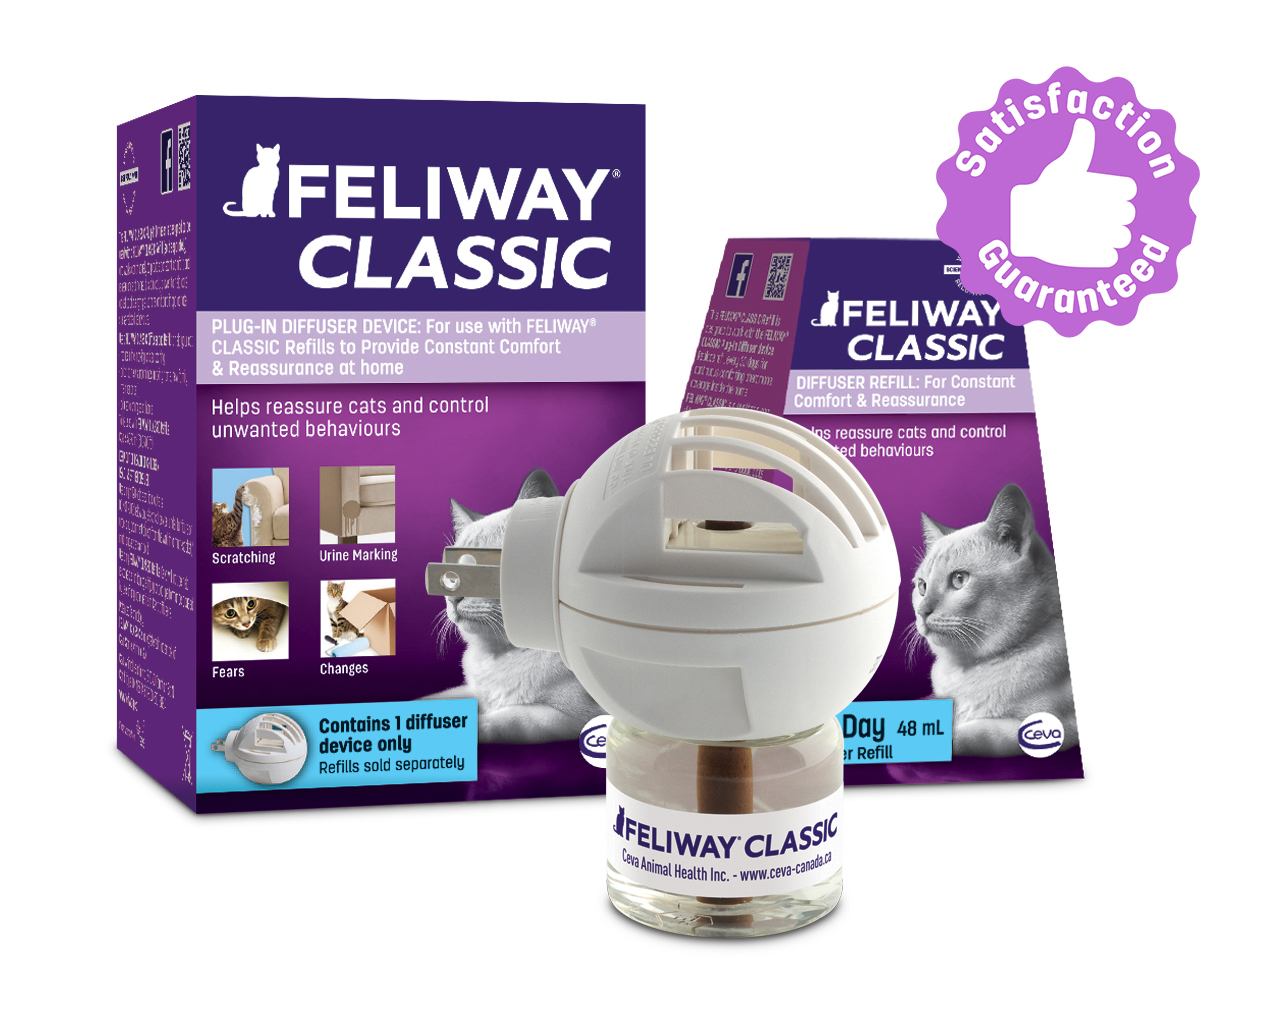 FELIWAY CLASSIC diffuser satisfaction guarantee